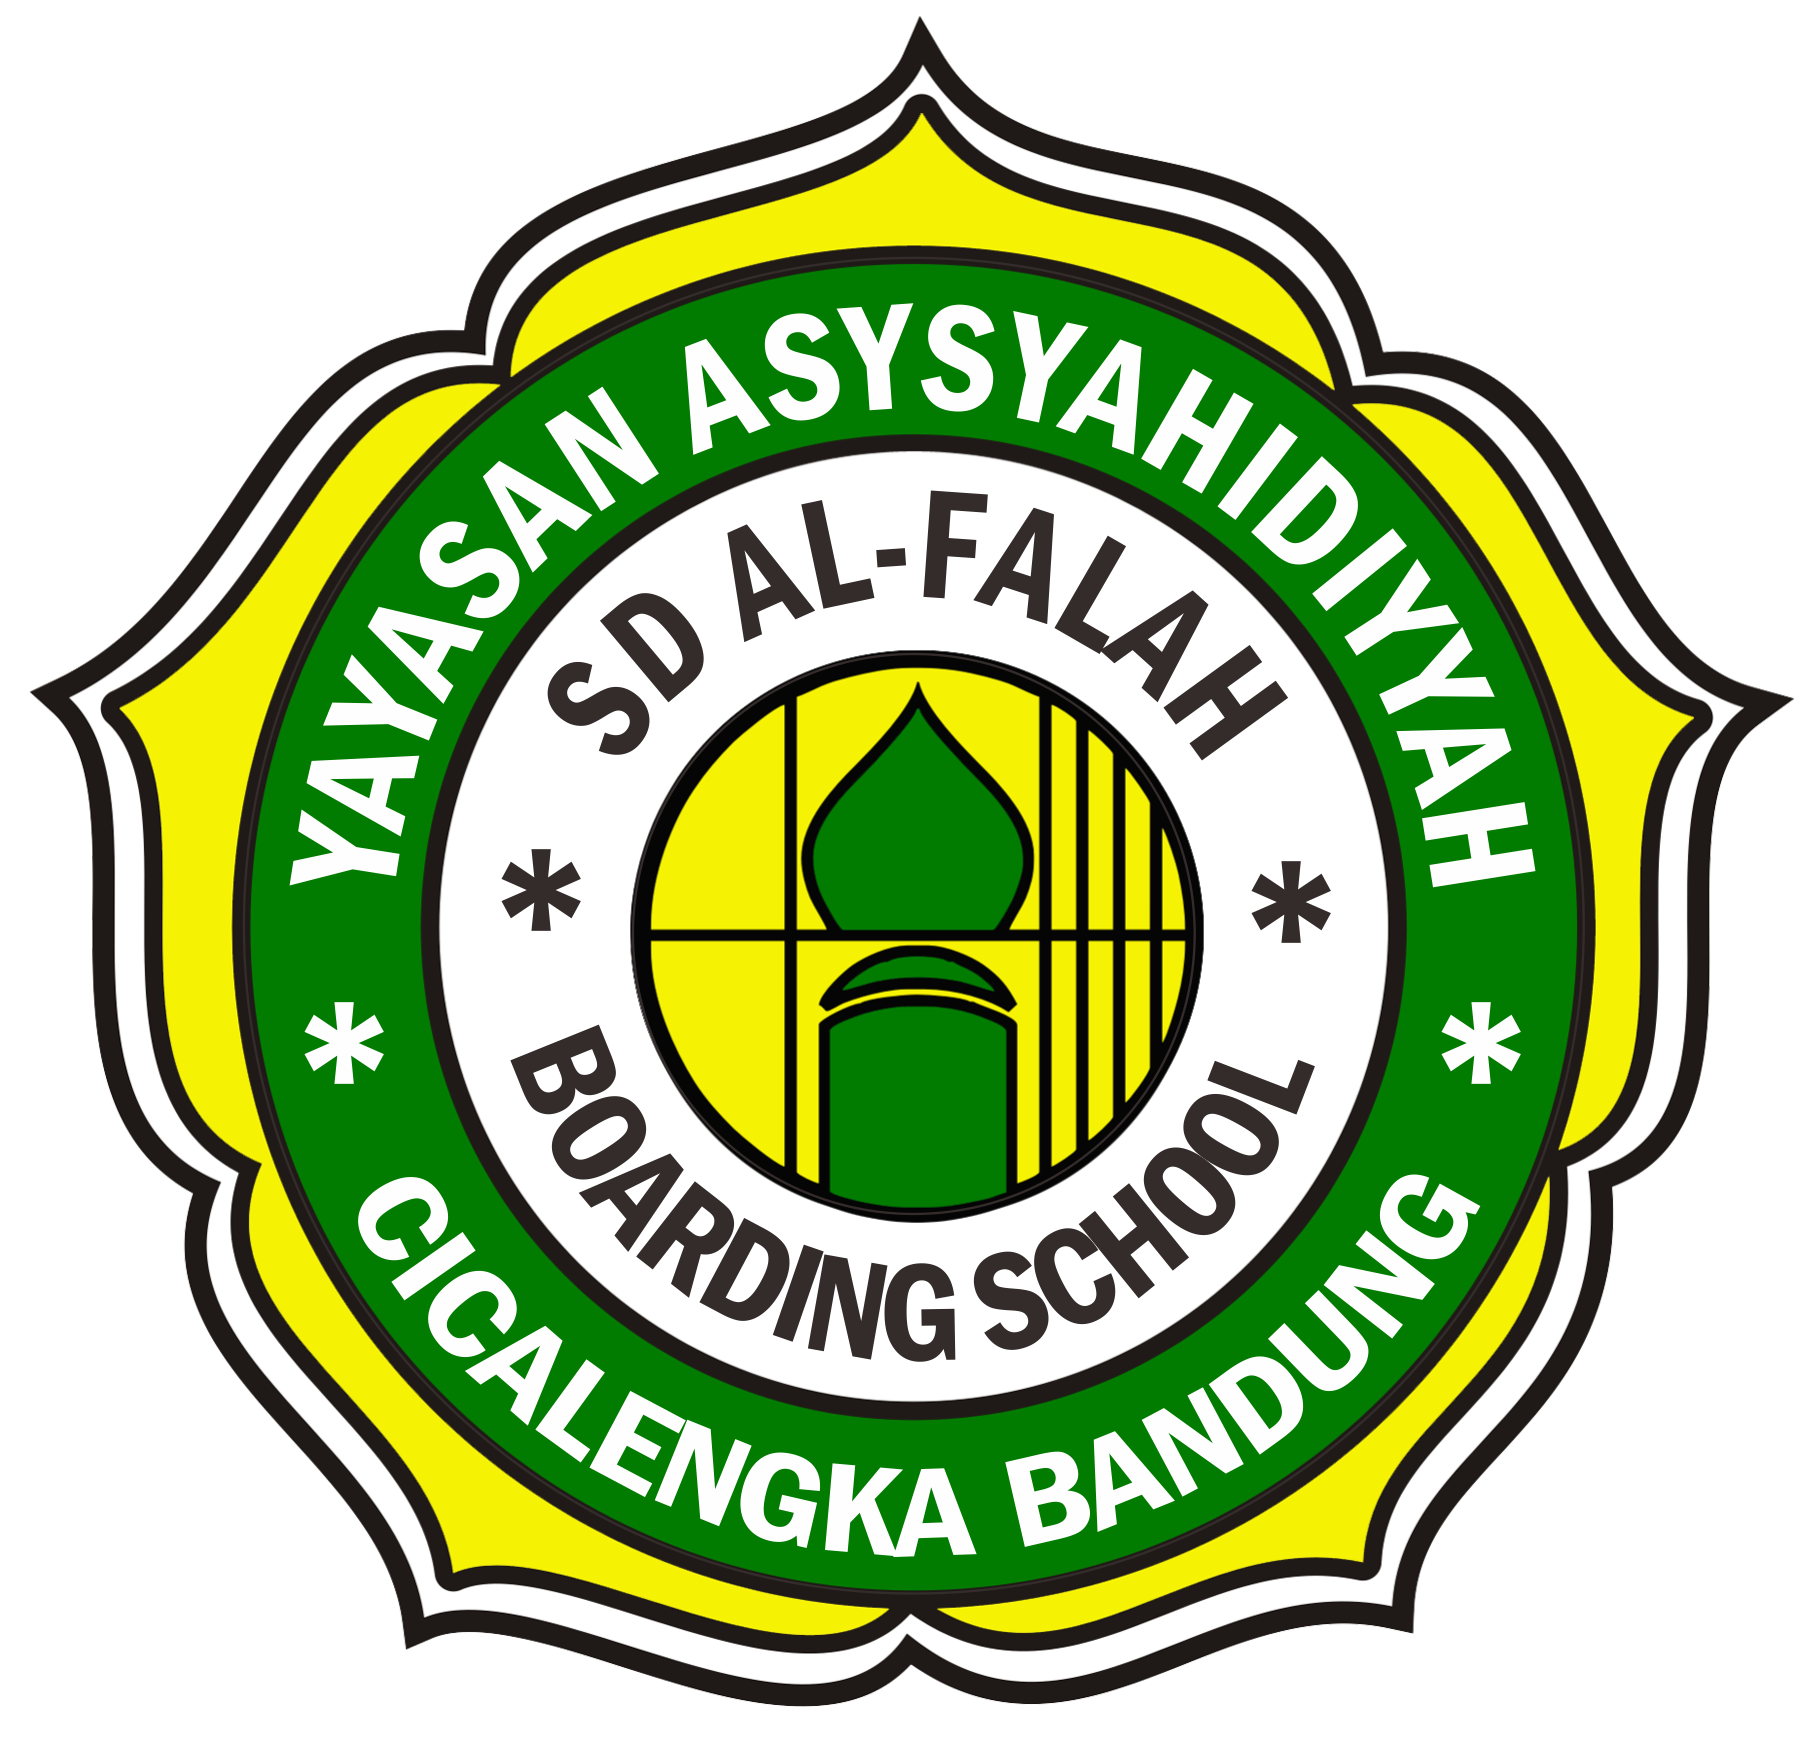 SD Al-FALAH BOARDING SCHOOL